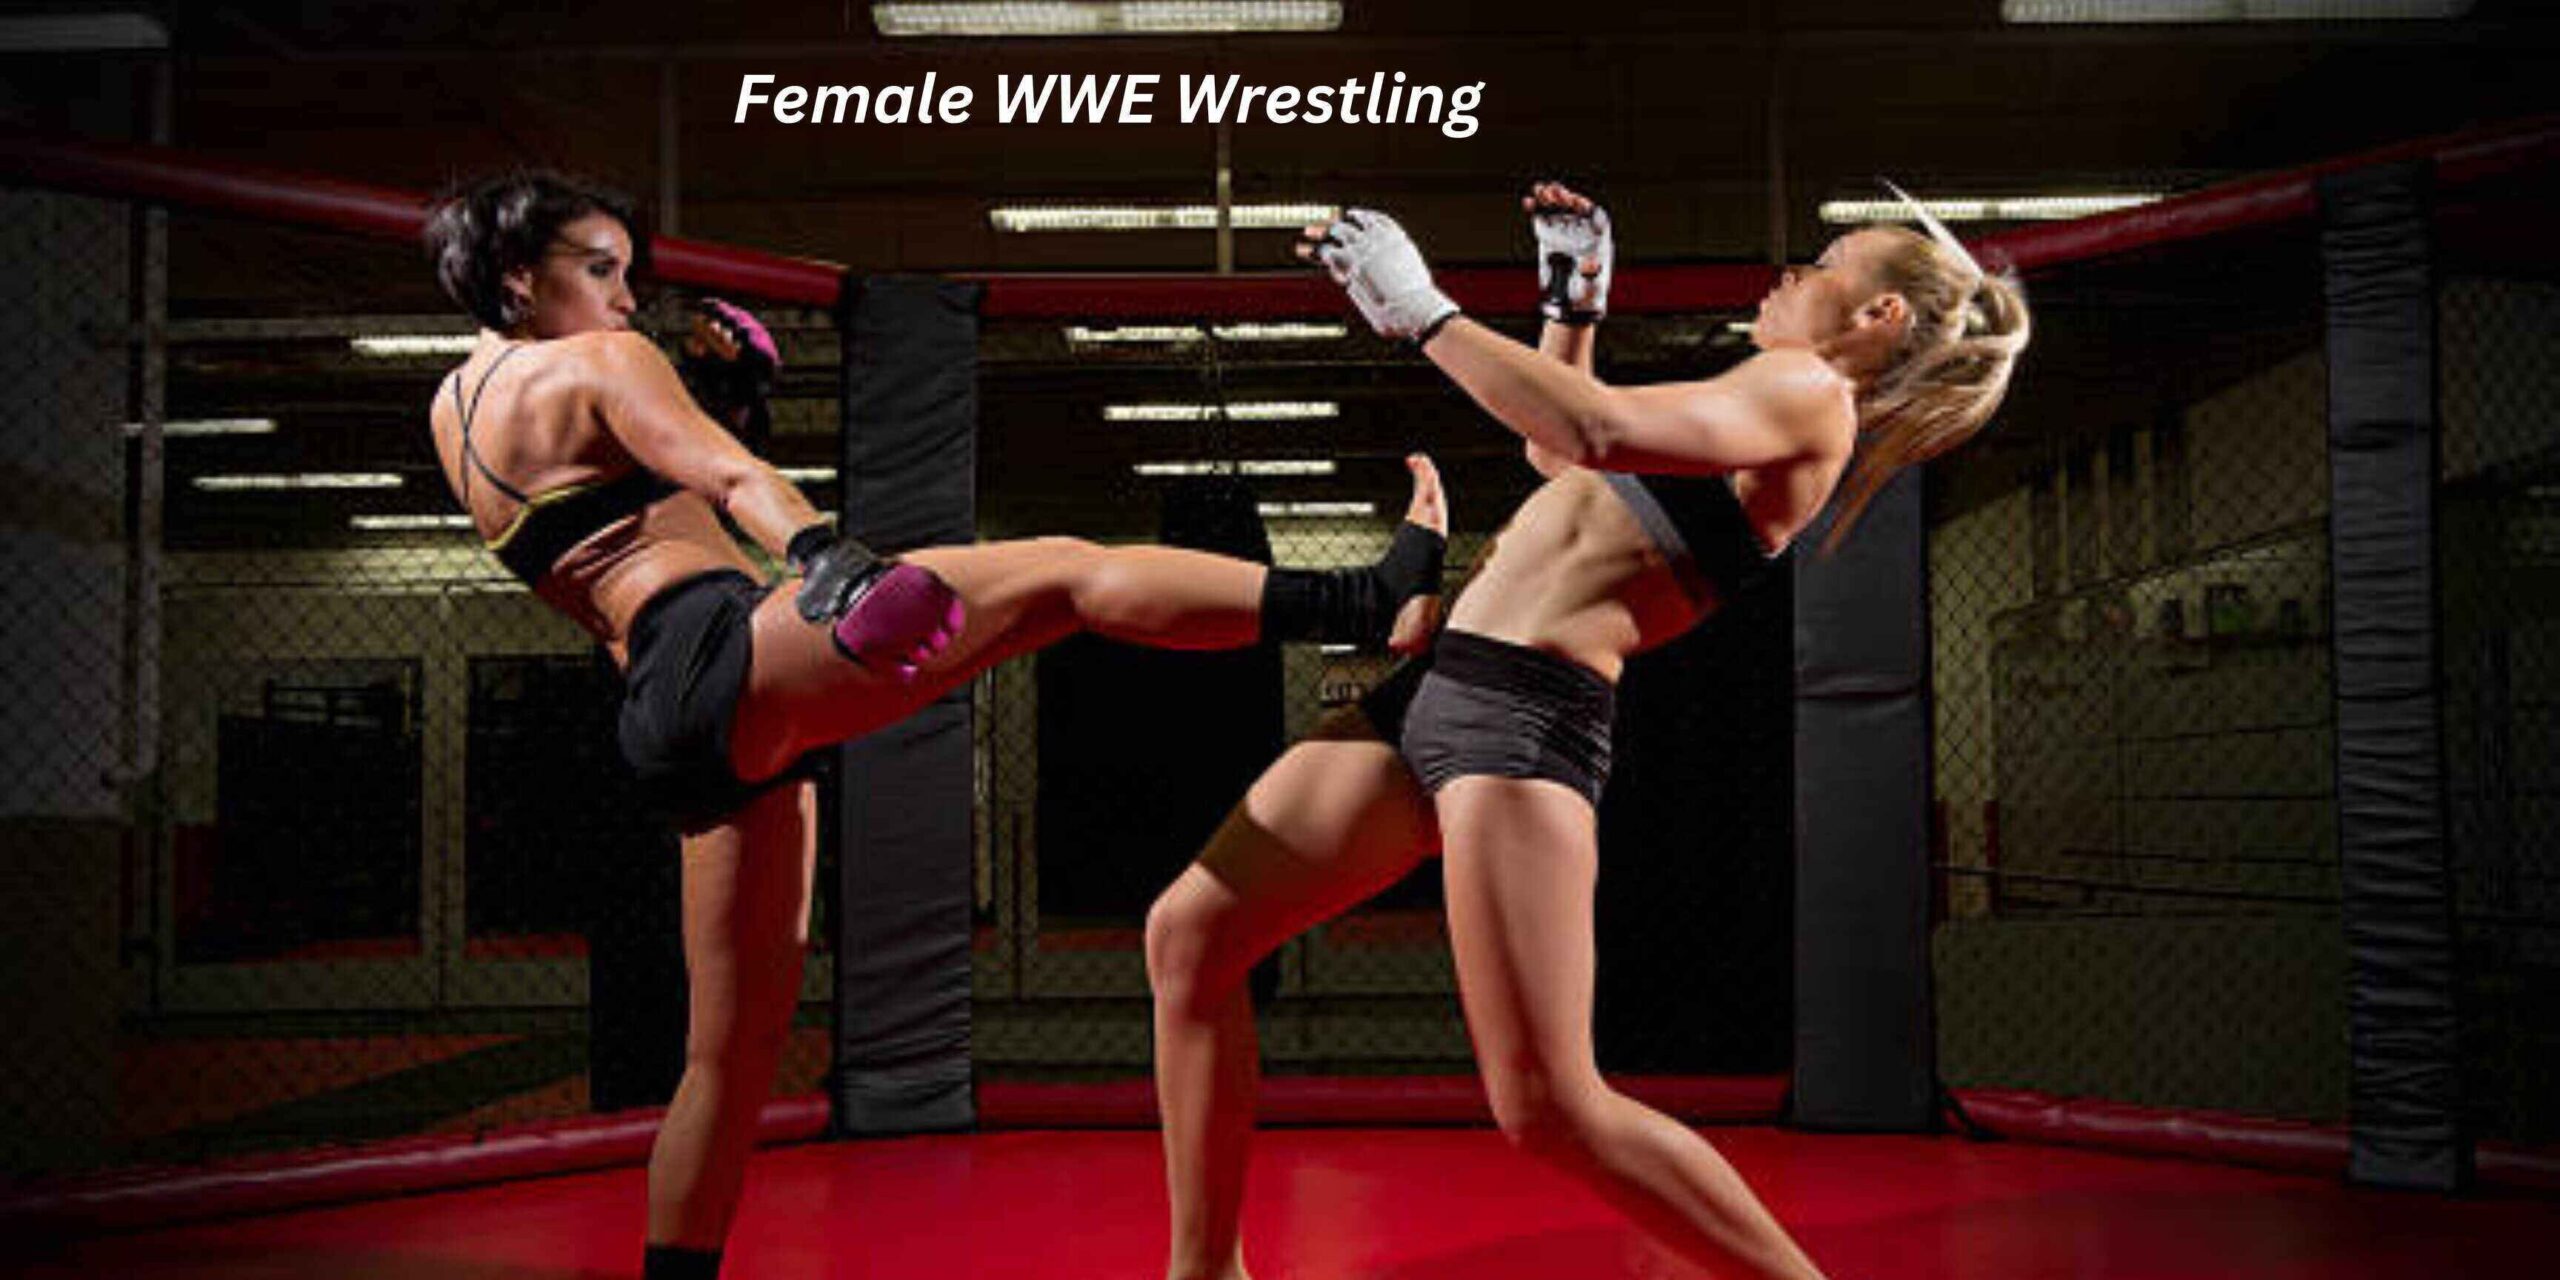 Female WWE Wrestling: Strength, Skill & Spectacle